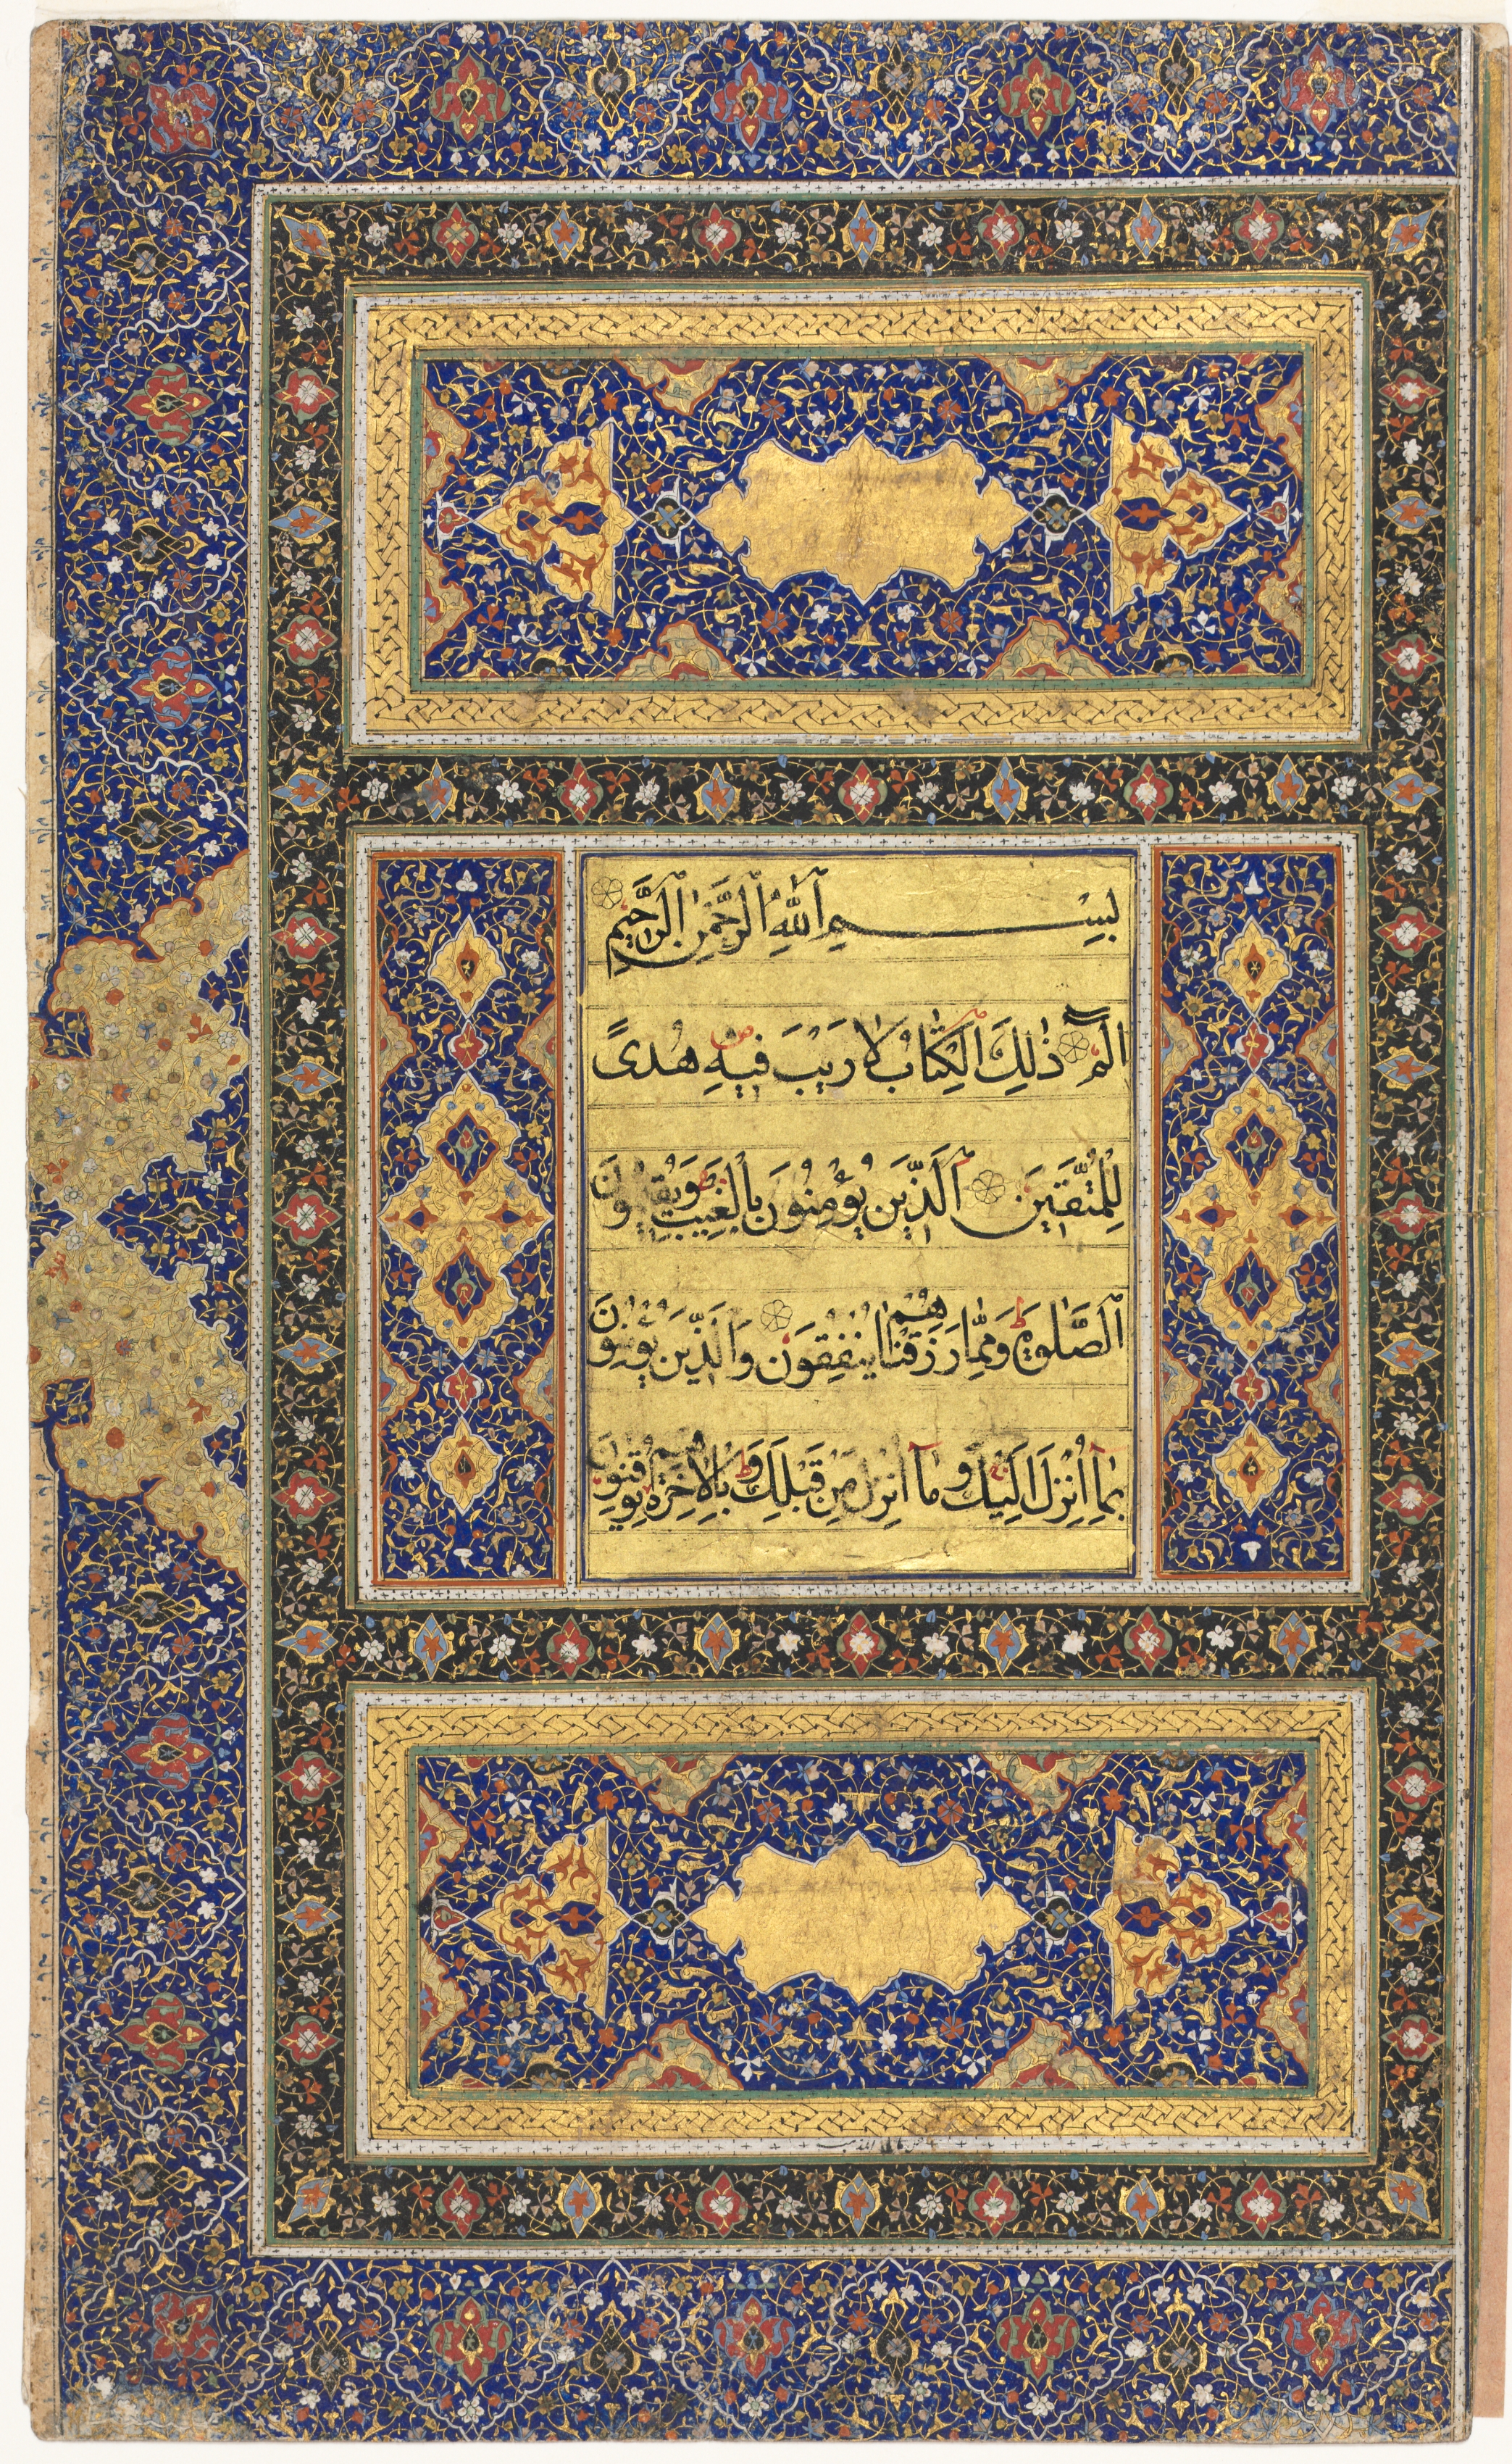 Qur'an Manuscript Folio (Recto); Left Folio of Double-Page Illuminated Frontispiece